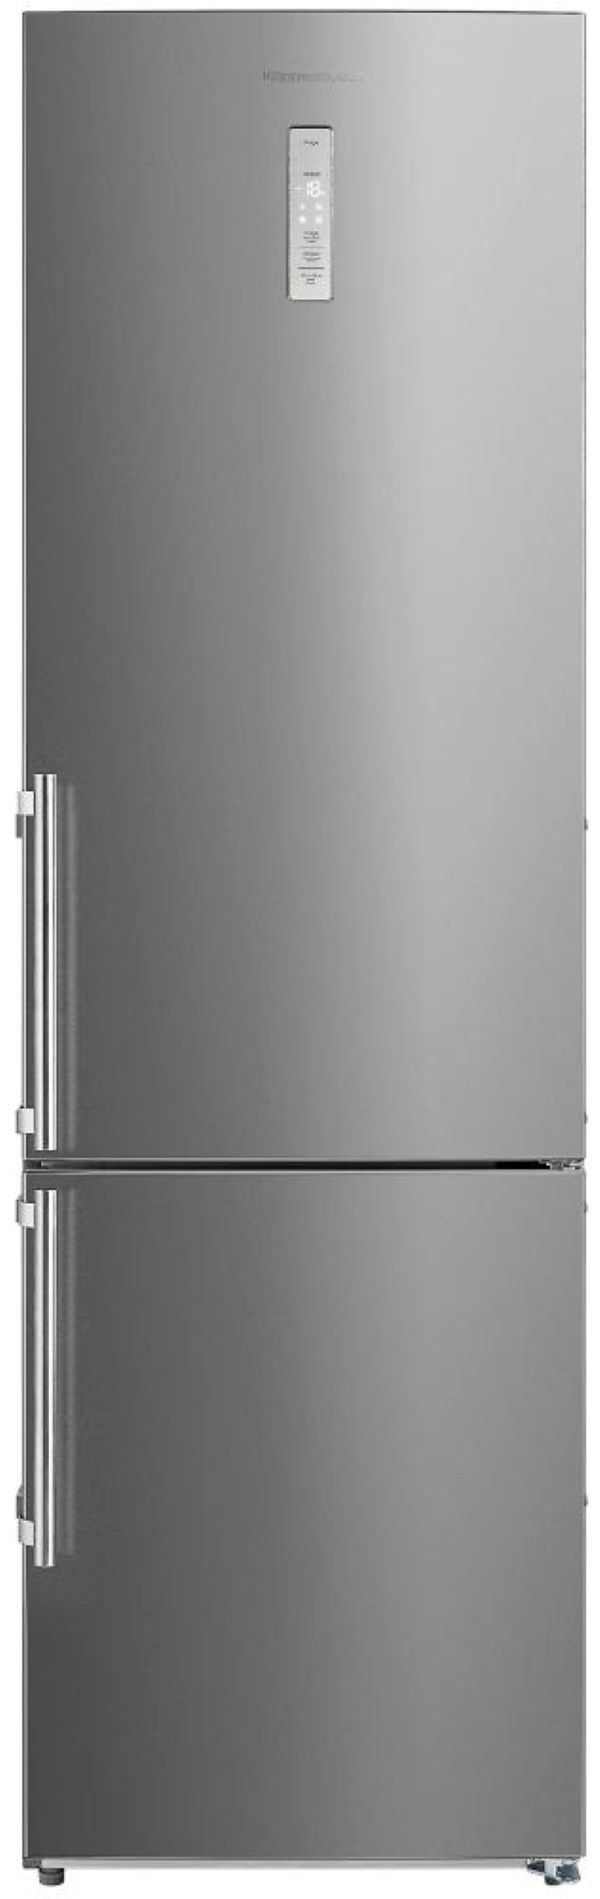 Холодильник NoBrand FKG 6600.0 E-02 серебристый холодильник kuppersbusch fkg 6600 0 e 02 серебристый